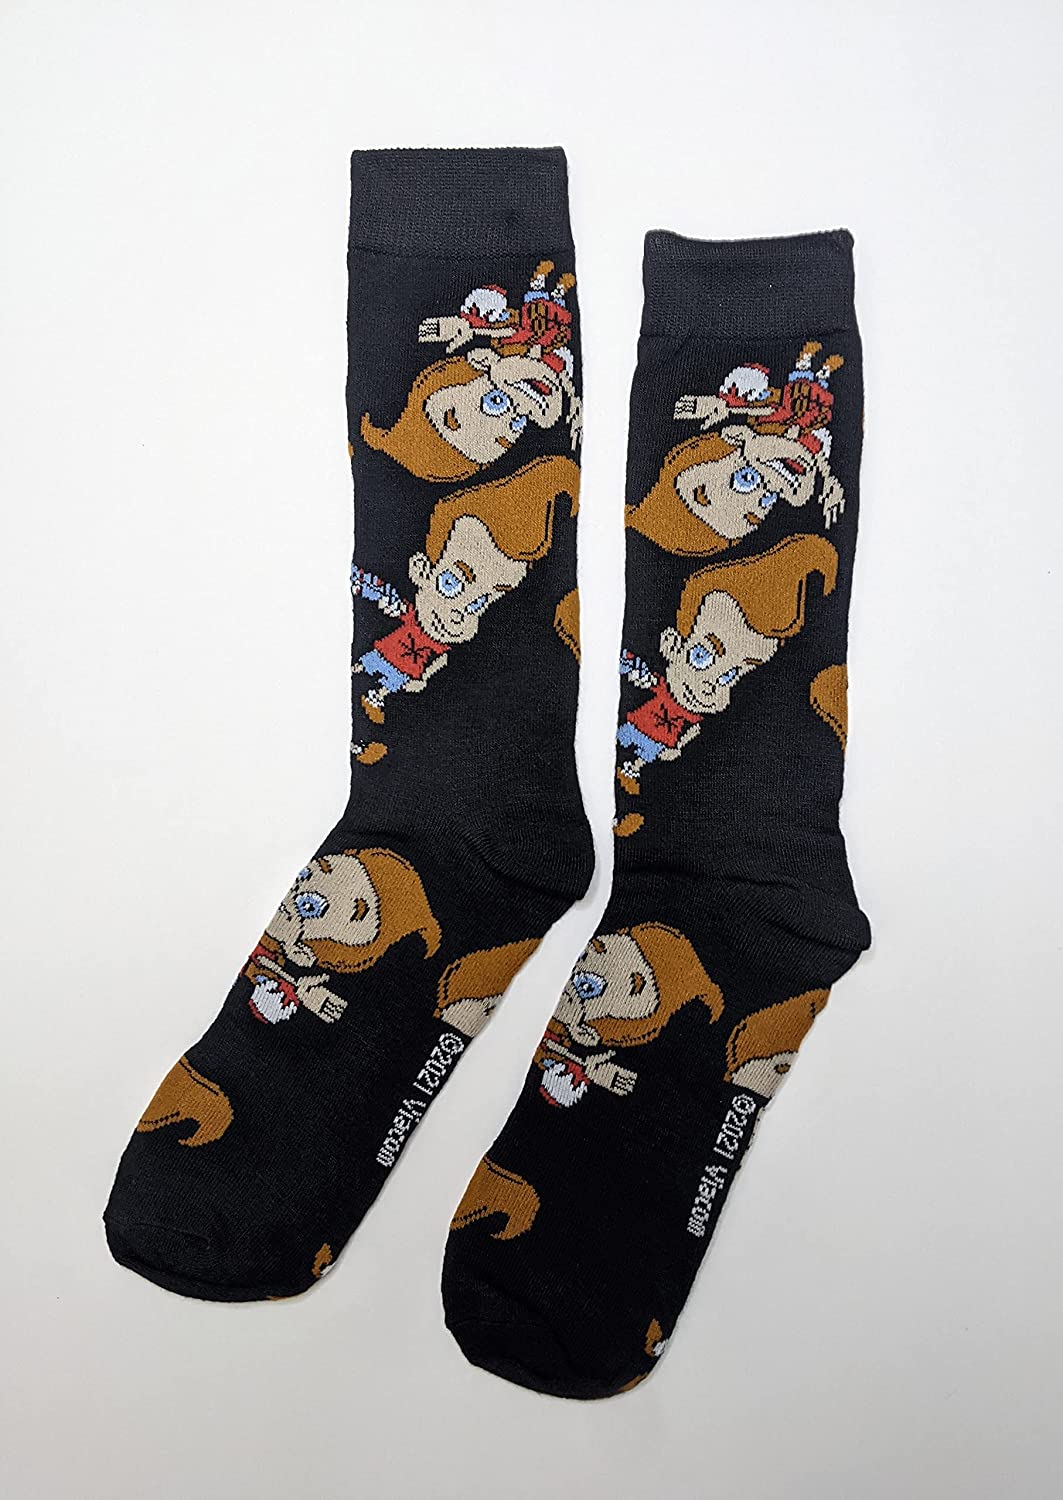 Nickelodeon Jimmy Neutron Boy Genius Men's Crew Socks Two Pair Pack